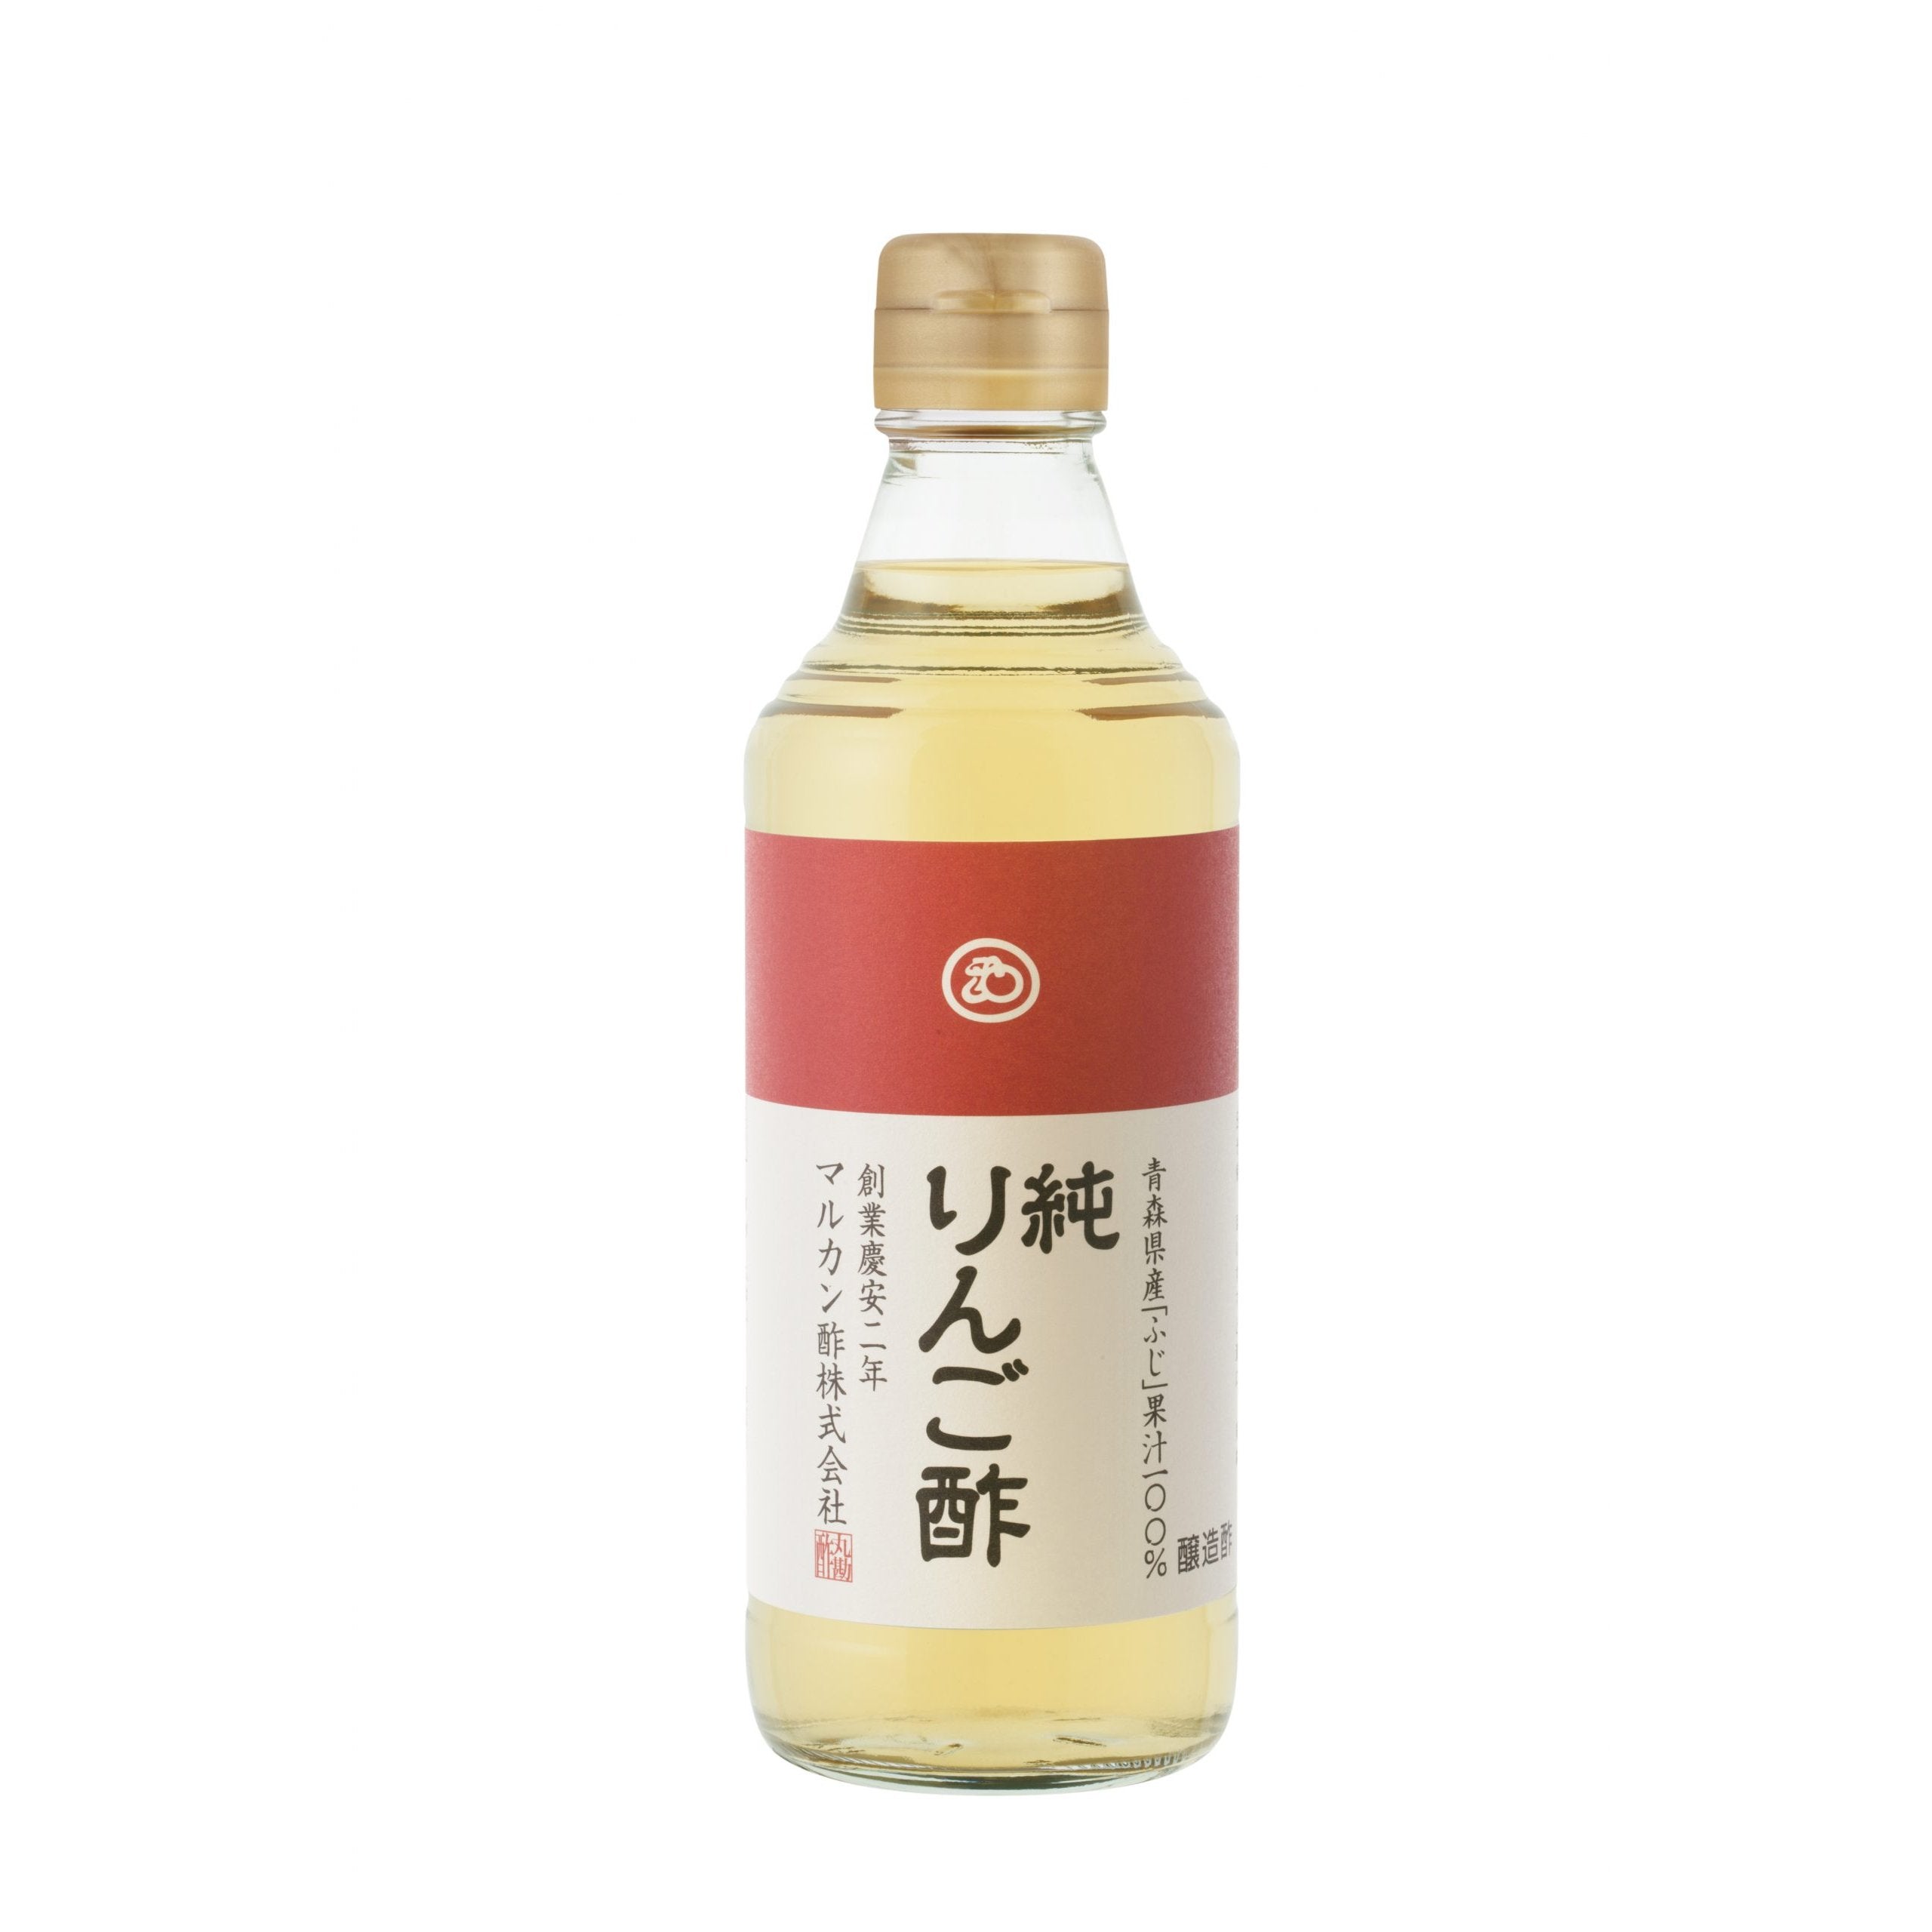 Marukan Pure Japanese Fuji Apple Cider Vinegar 360ml